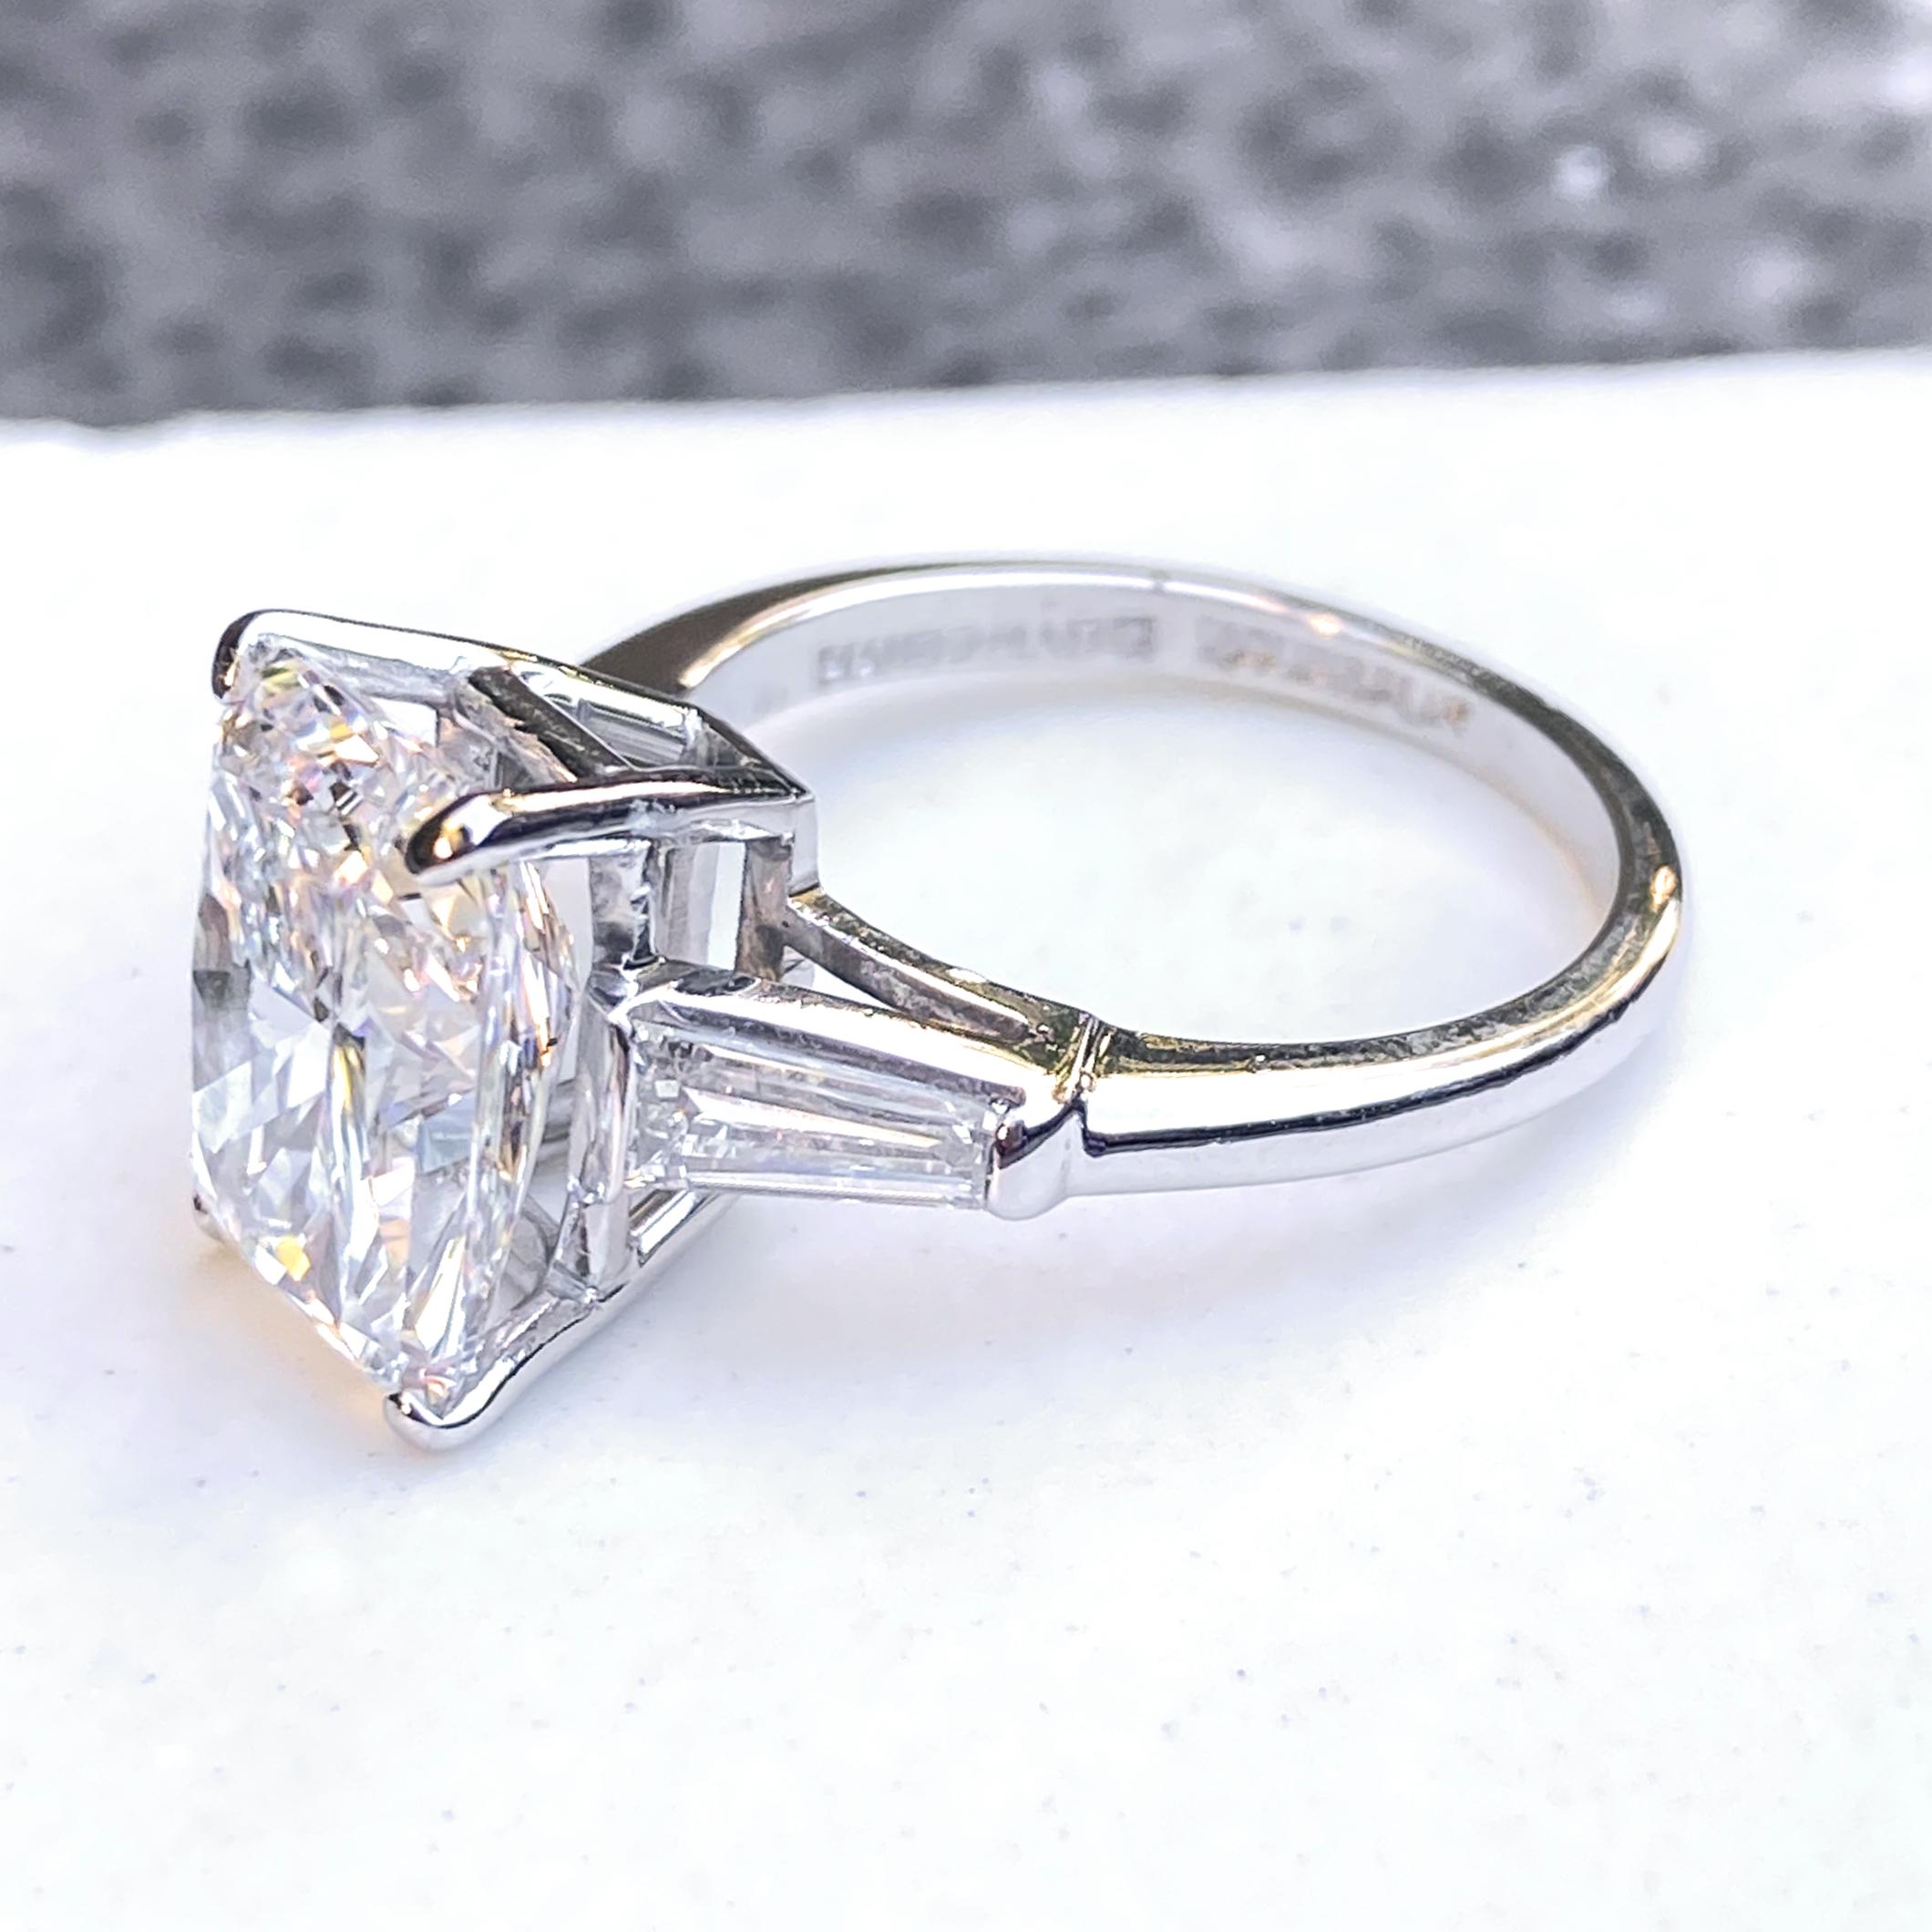 4.06 Carat E-VVS1 GIA Certified Radiant Cut Diamond in Deco-Era Platinum Ring 9